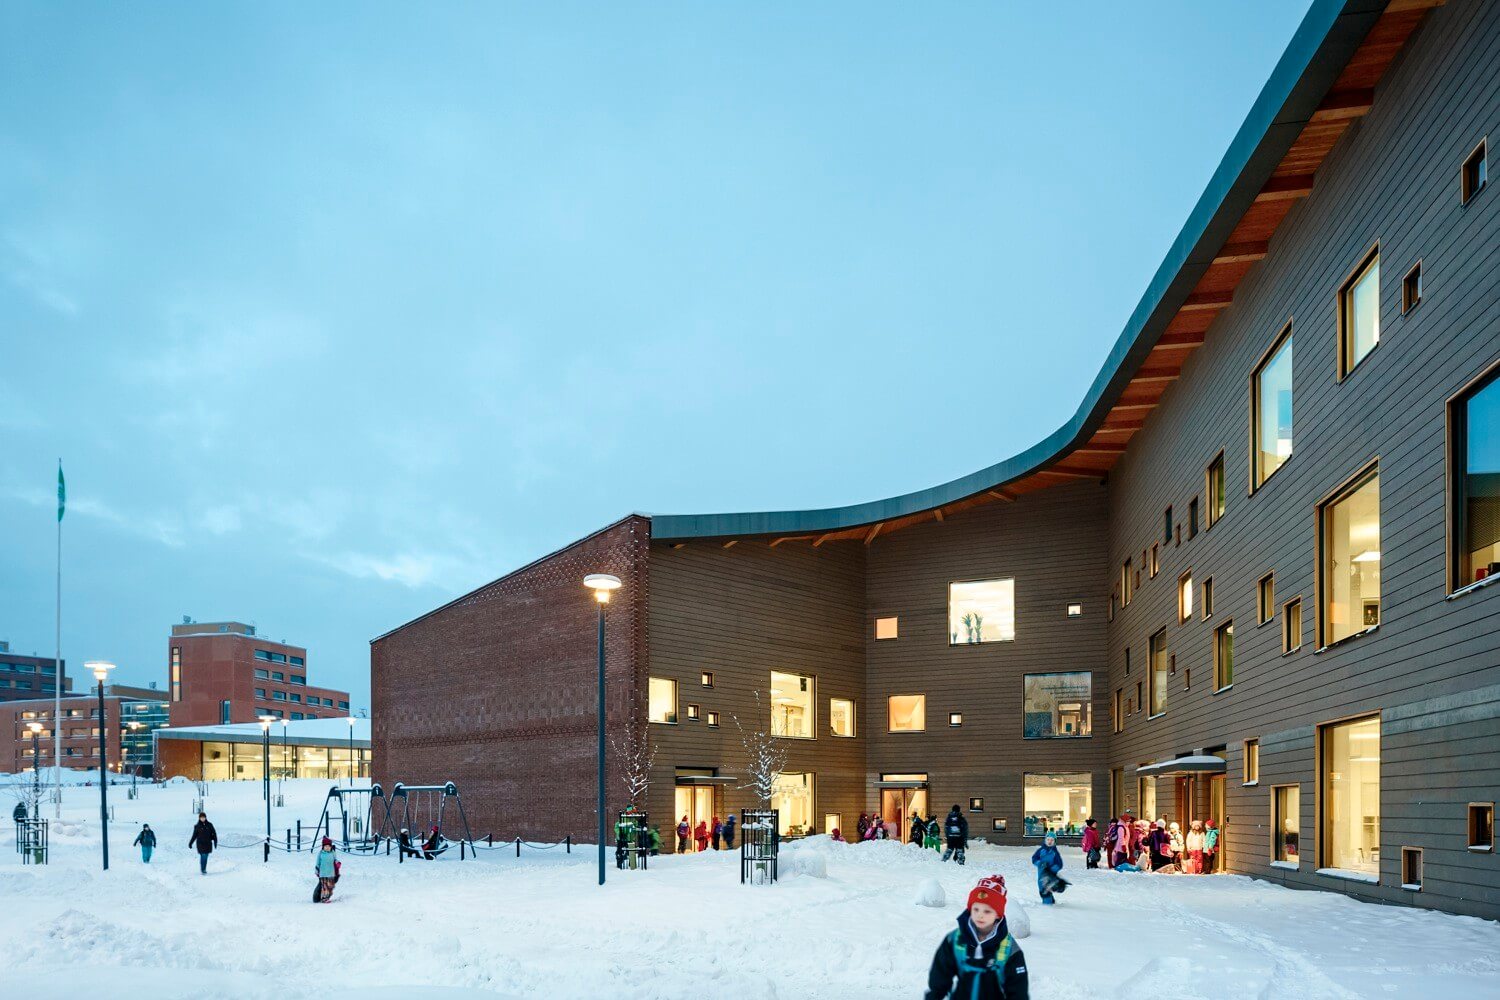 Saunalahden koulu - Saunalahti school in Espoo, Finland designed by Versas architects.